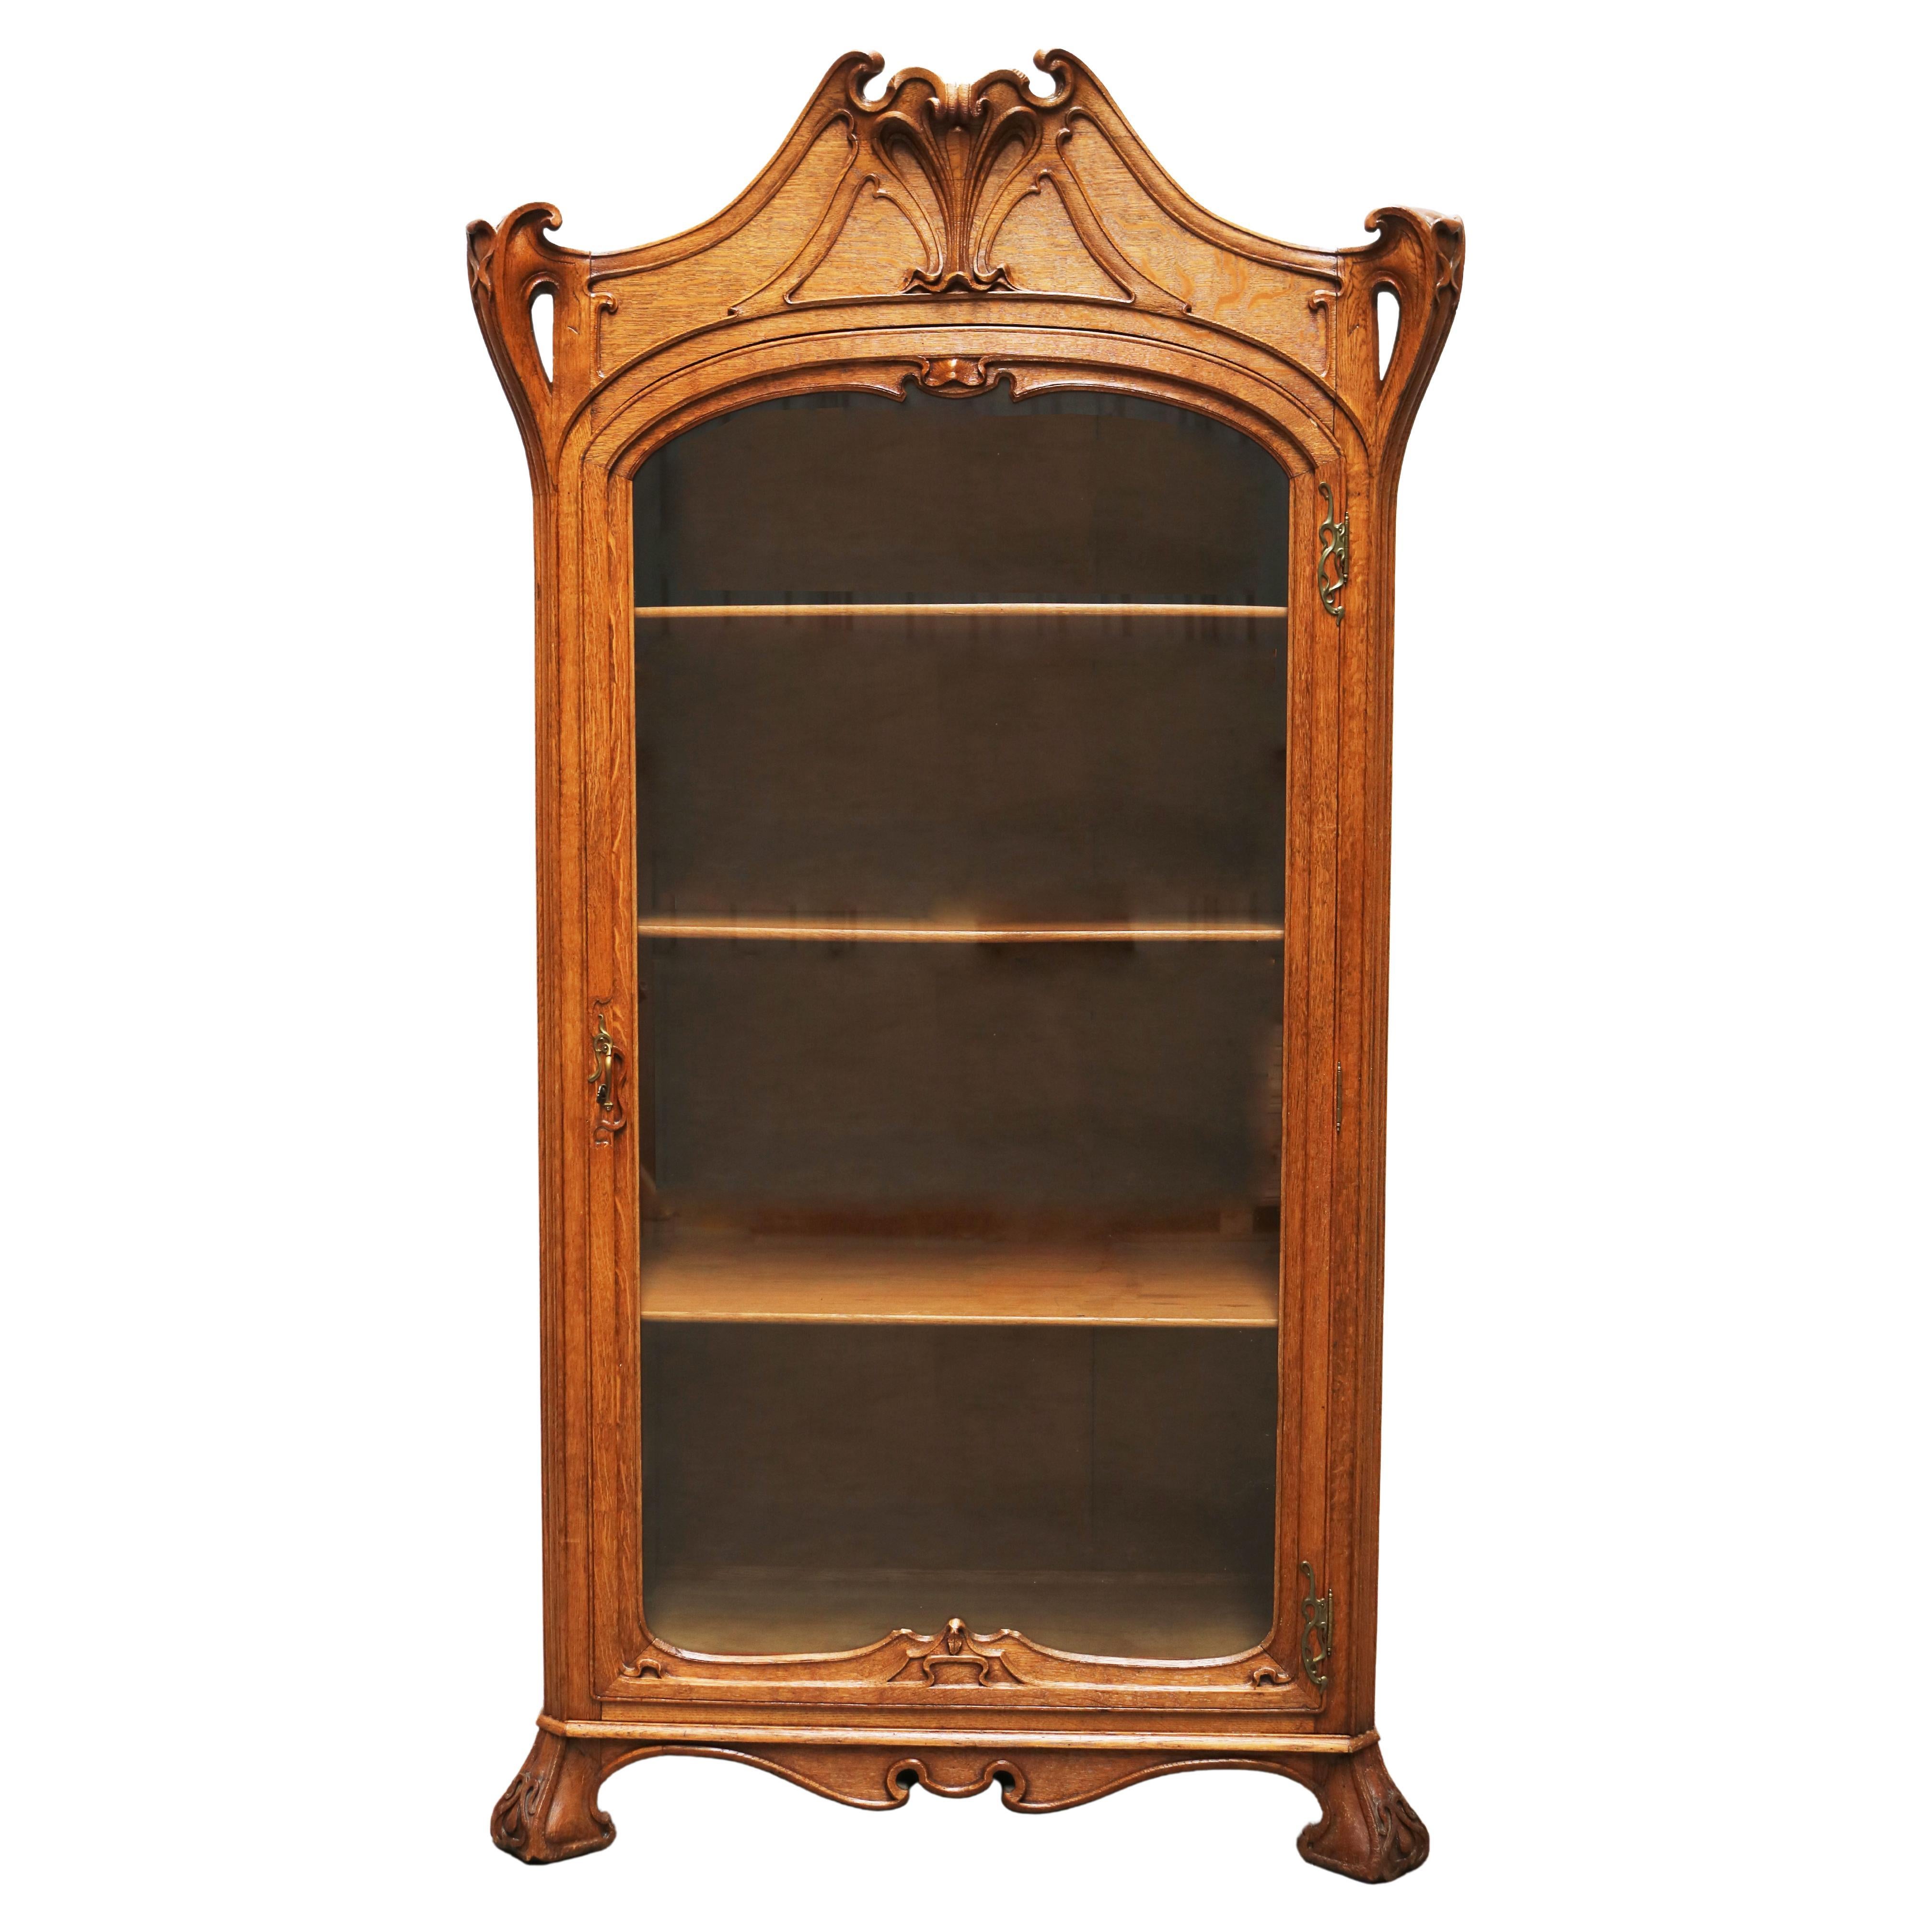 Antique French Art Nouveau Cabinet by Henri Sauvage 1900 Oak Display Cabinet